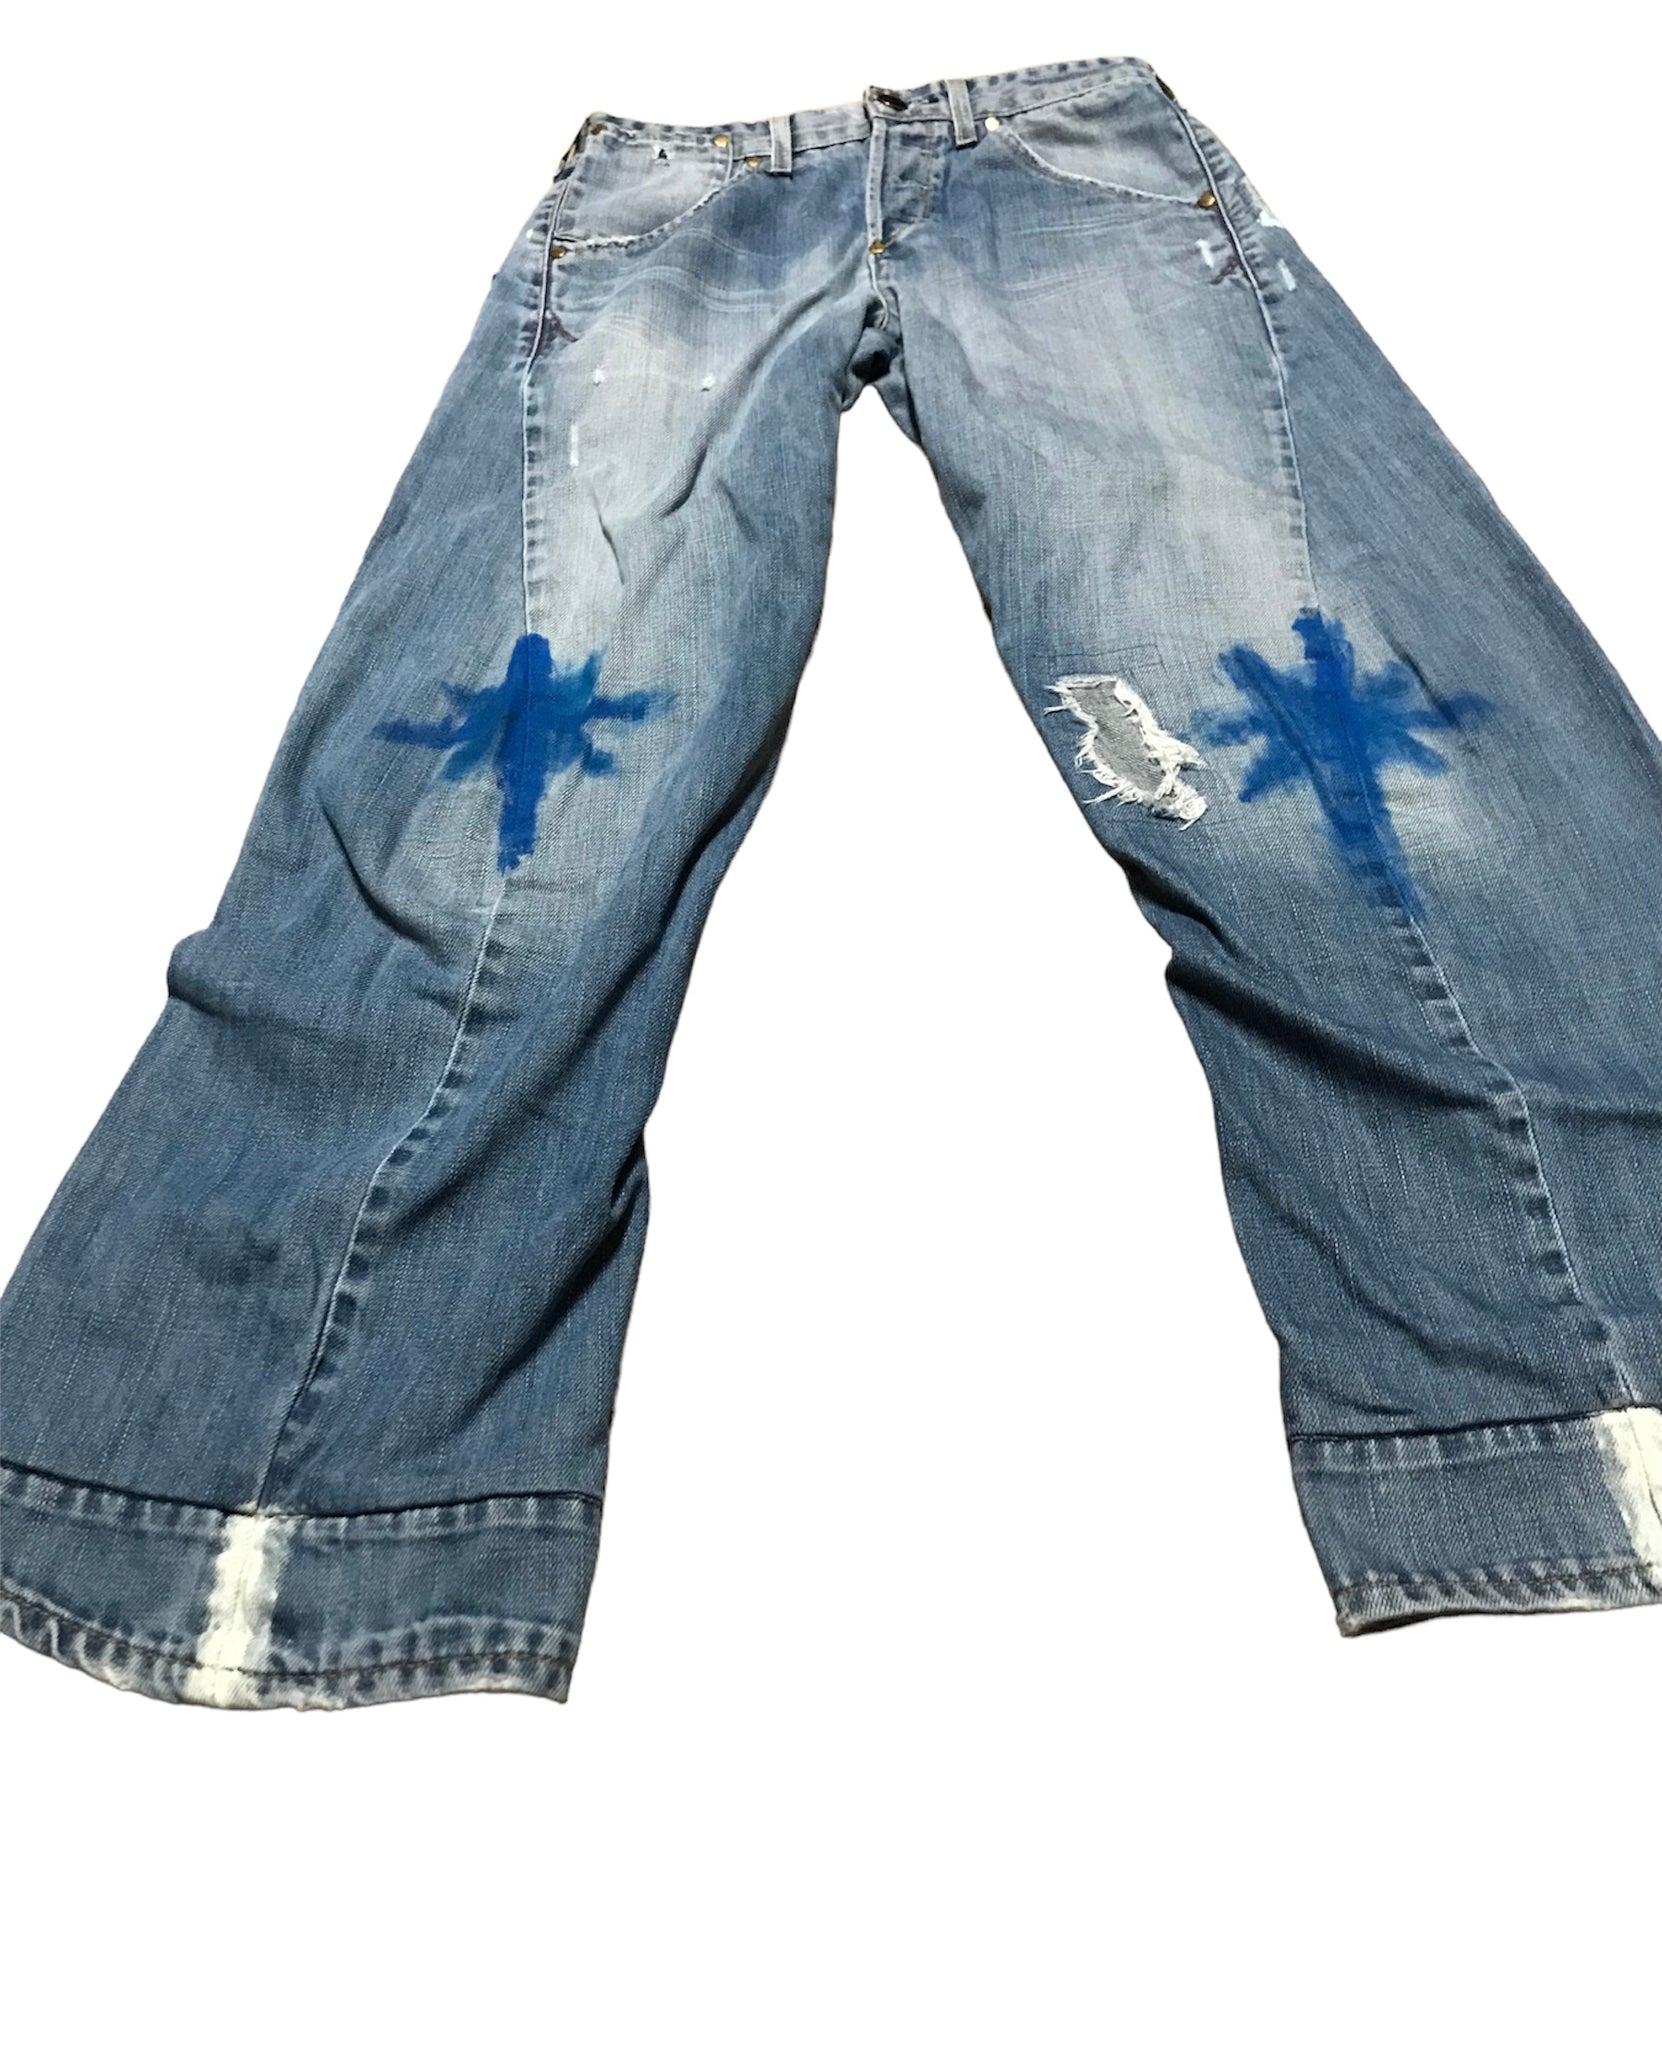 Back Pocket Splatter Stars and Stripes Jeans – W/Love